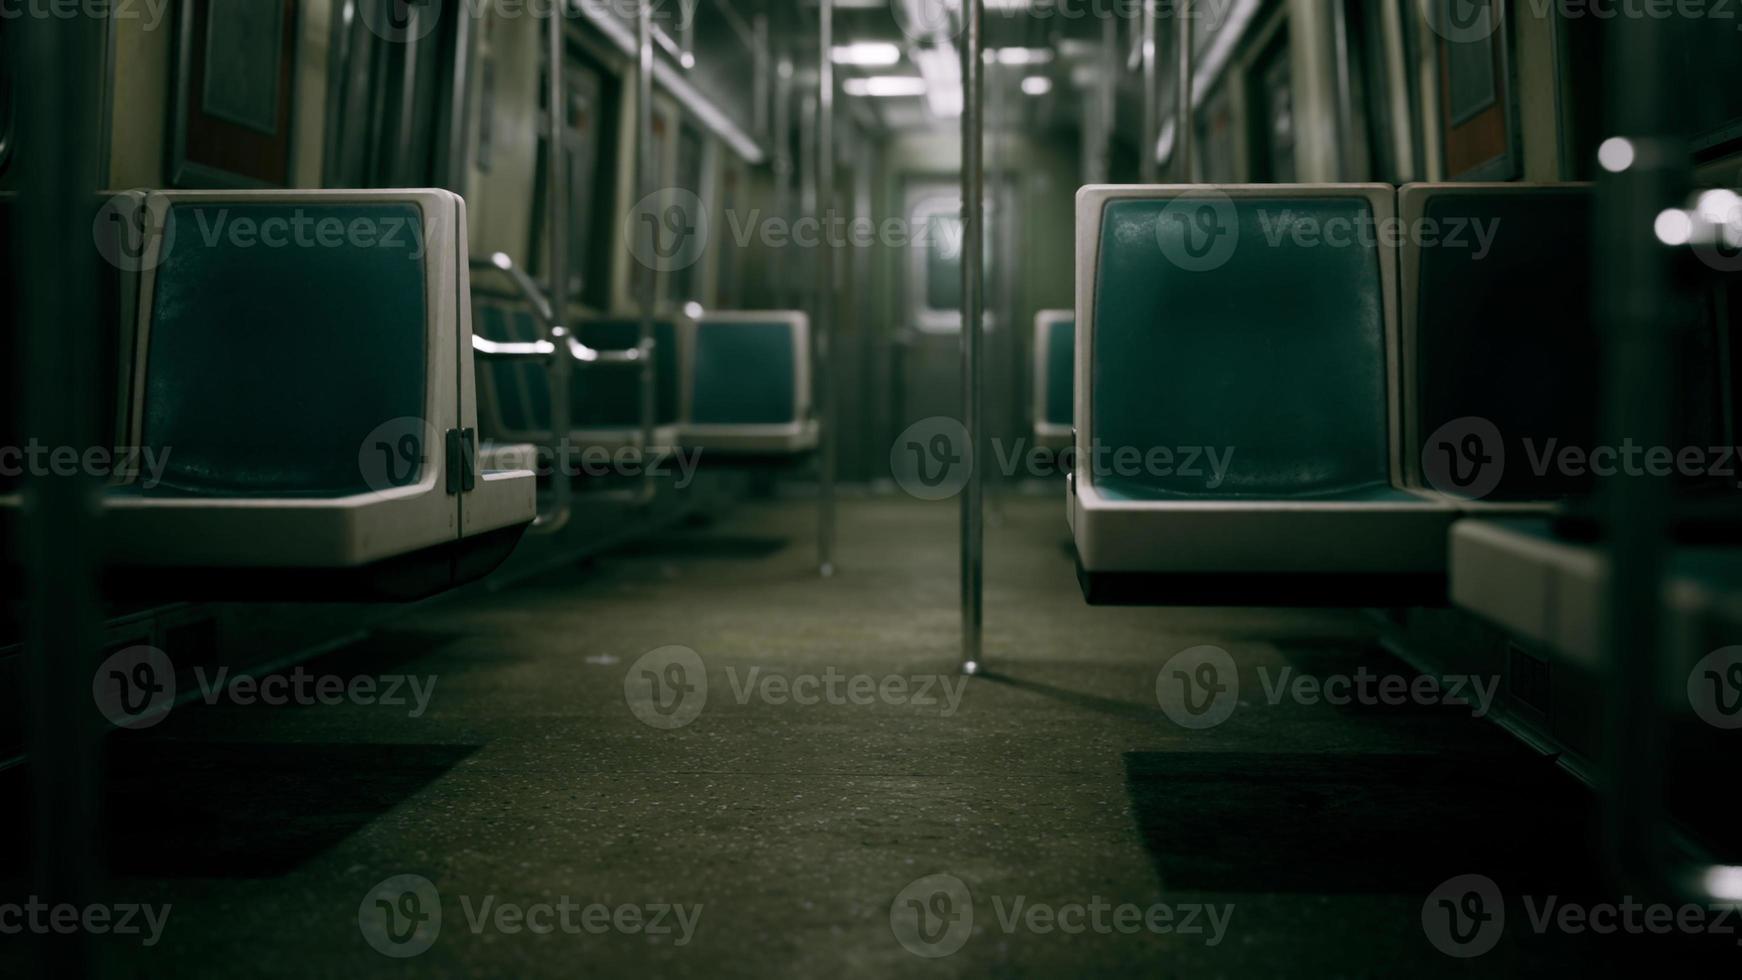 empty Public Transit Subway Metro Train photo